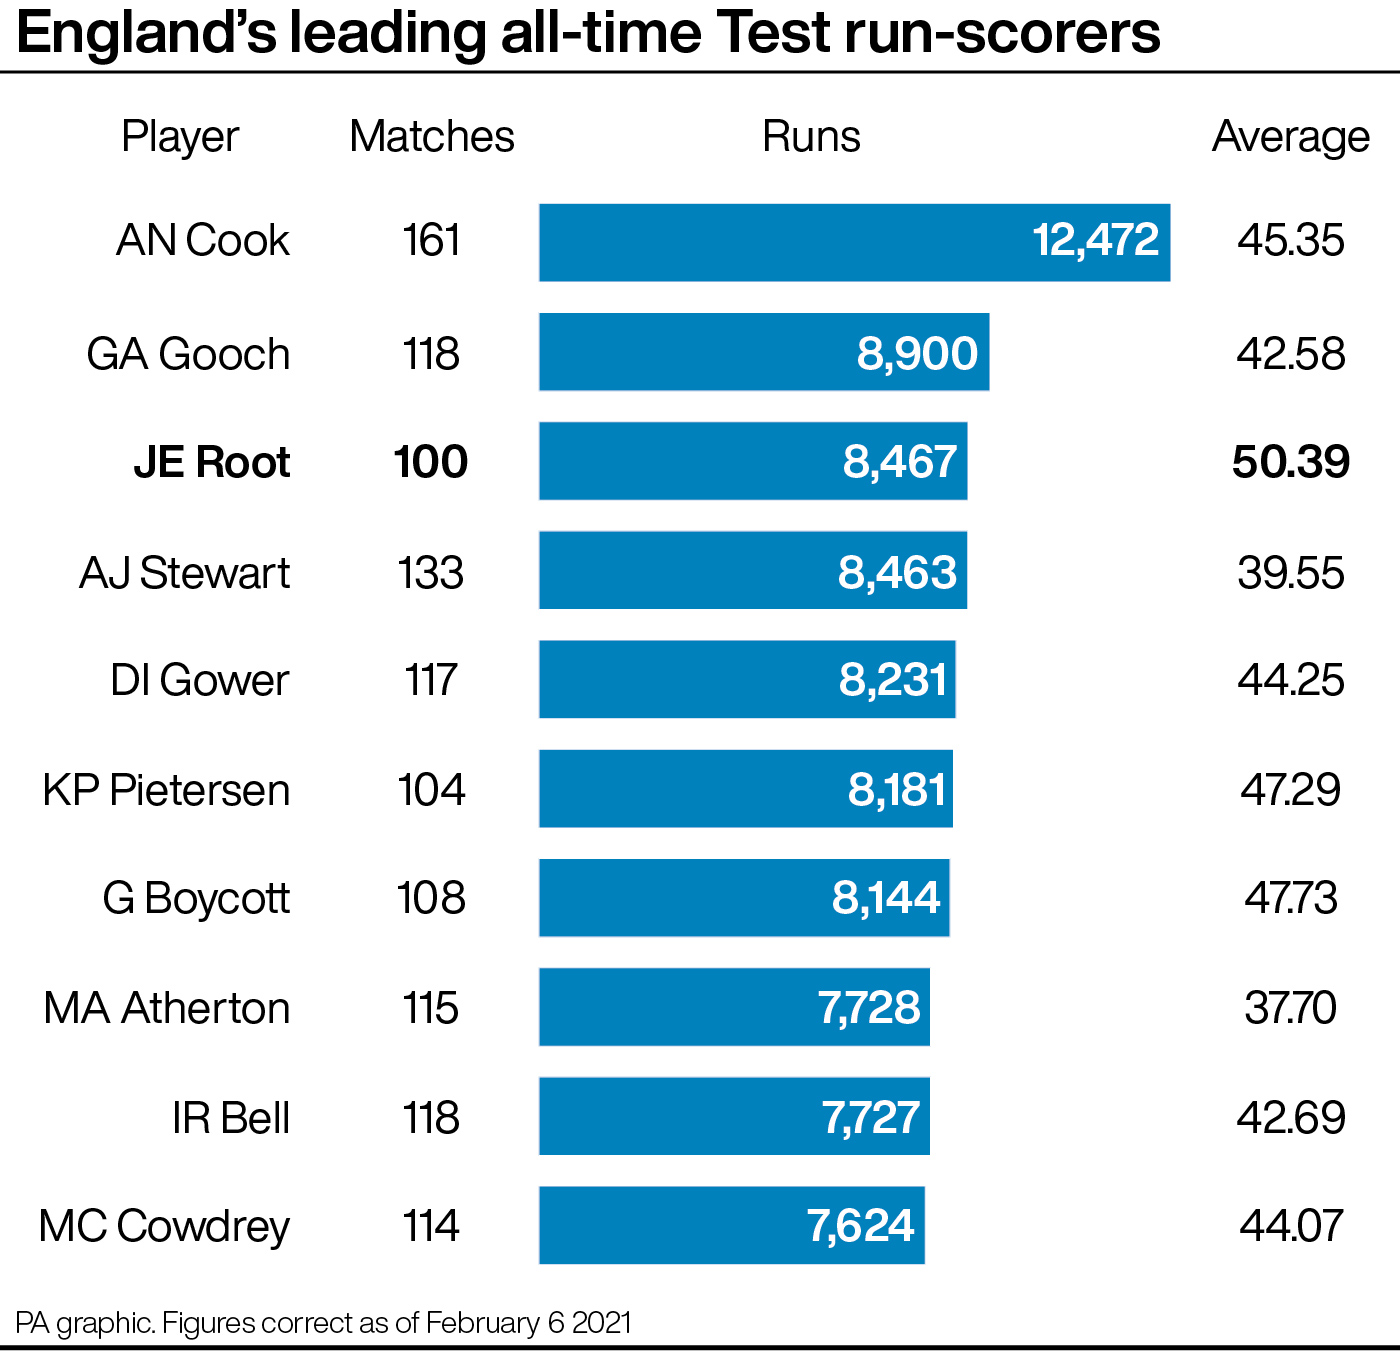 England's top 10 Test run-scorers